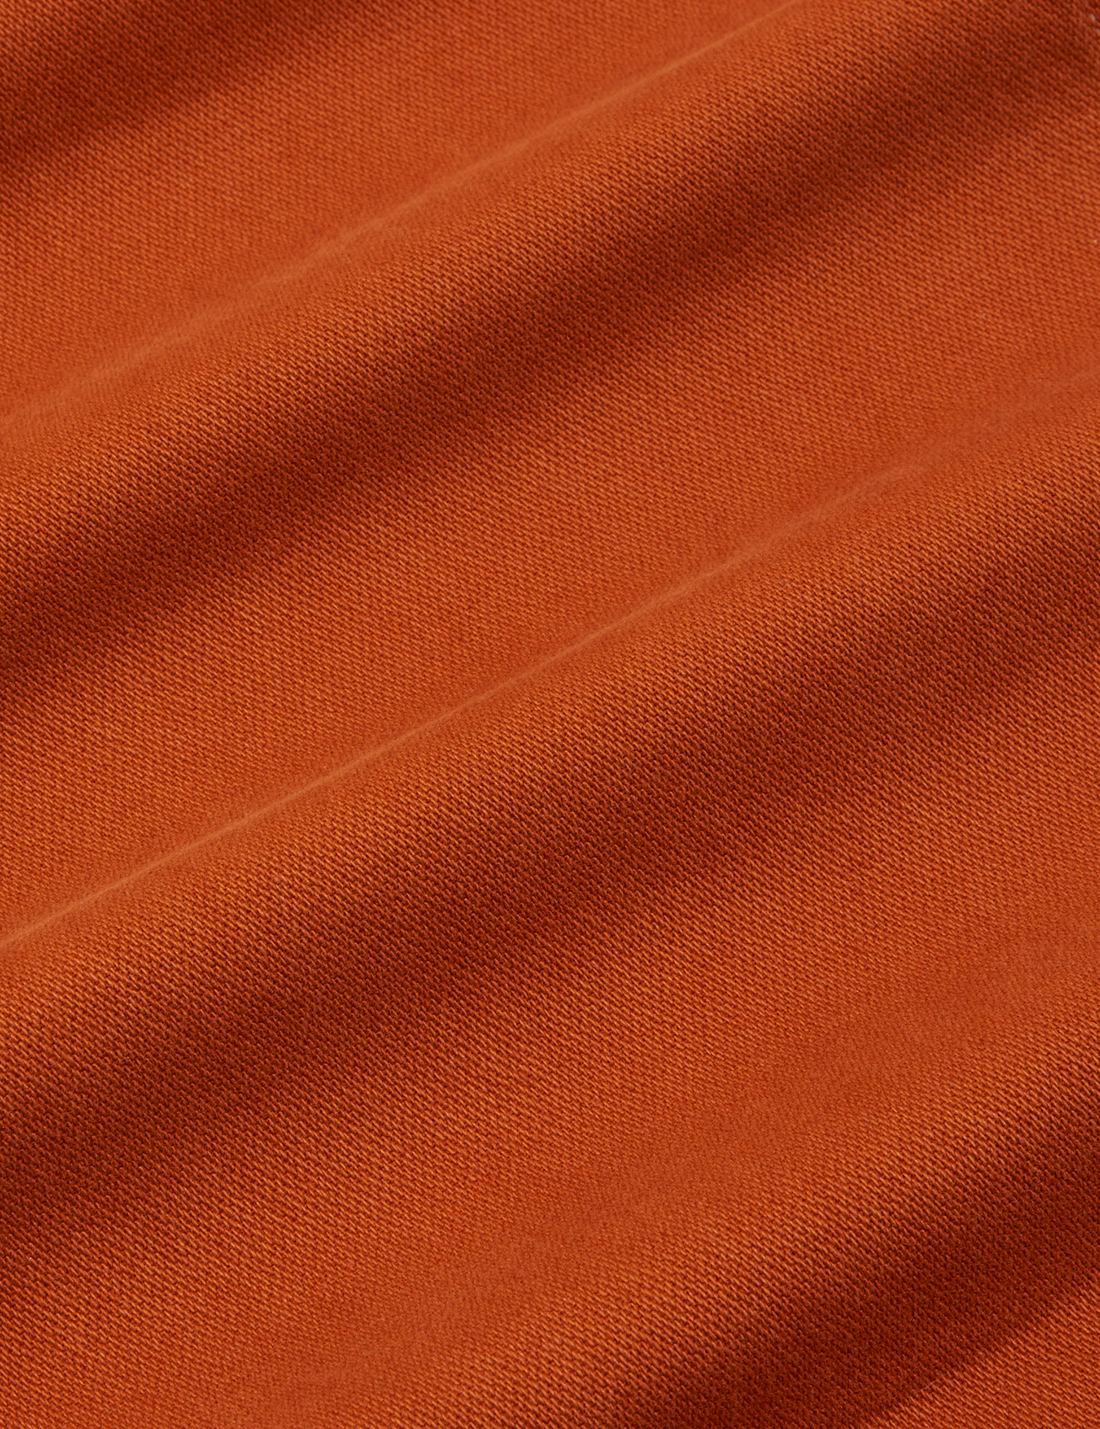 Original Overalls in Burnt Terracotta fabric detail